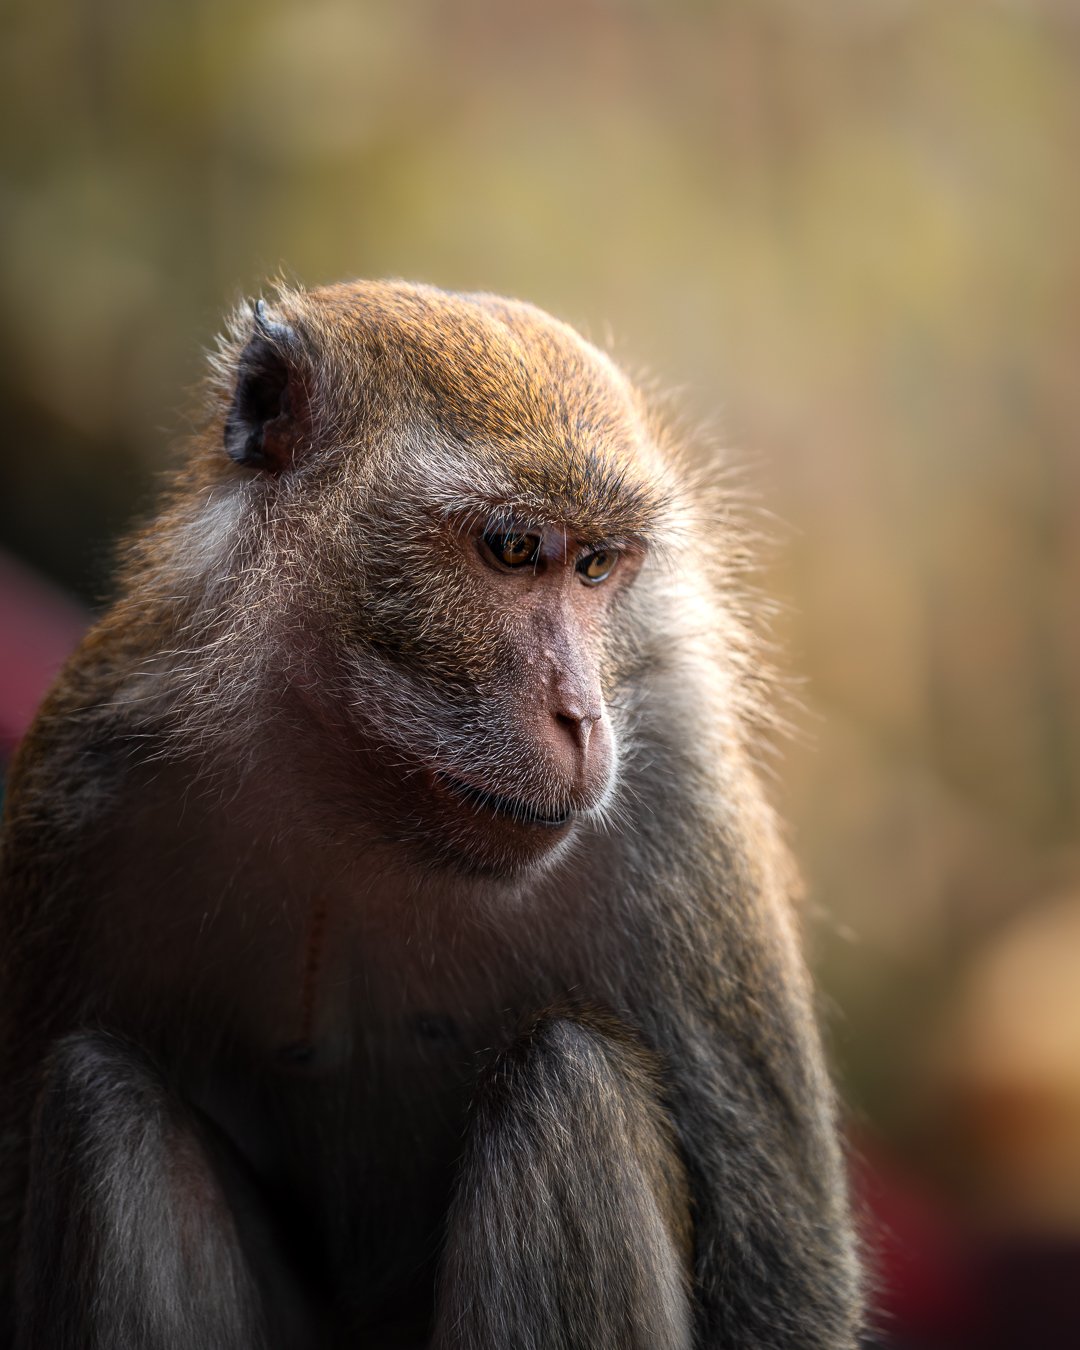 Can't get enough of this monkeys portraits 🙈 at the entrance of Batu Caves, Kuala Lumpur.

Nikon D810

#monkey #wildlife #wildlifephotography #wildlifeonearth #wildlifeofinstagram #natgeo #natgeoyourshot #natgeowild #nikon #raw_wildlife #olhoportugu